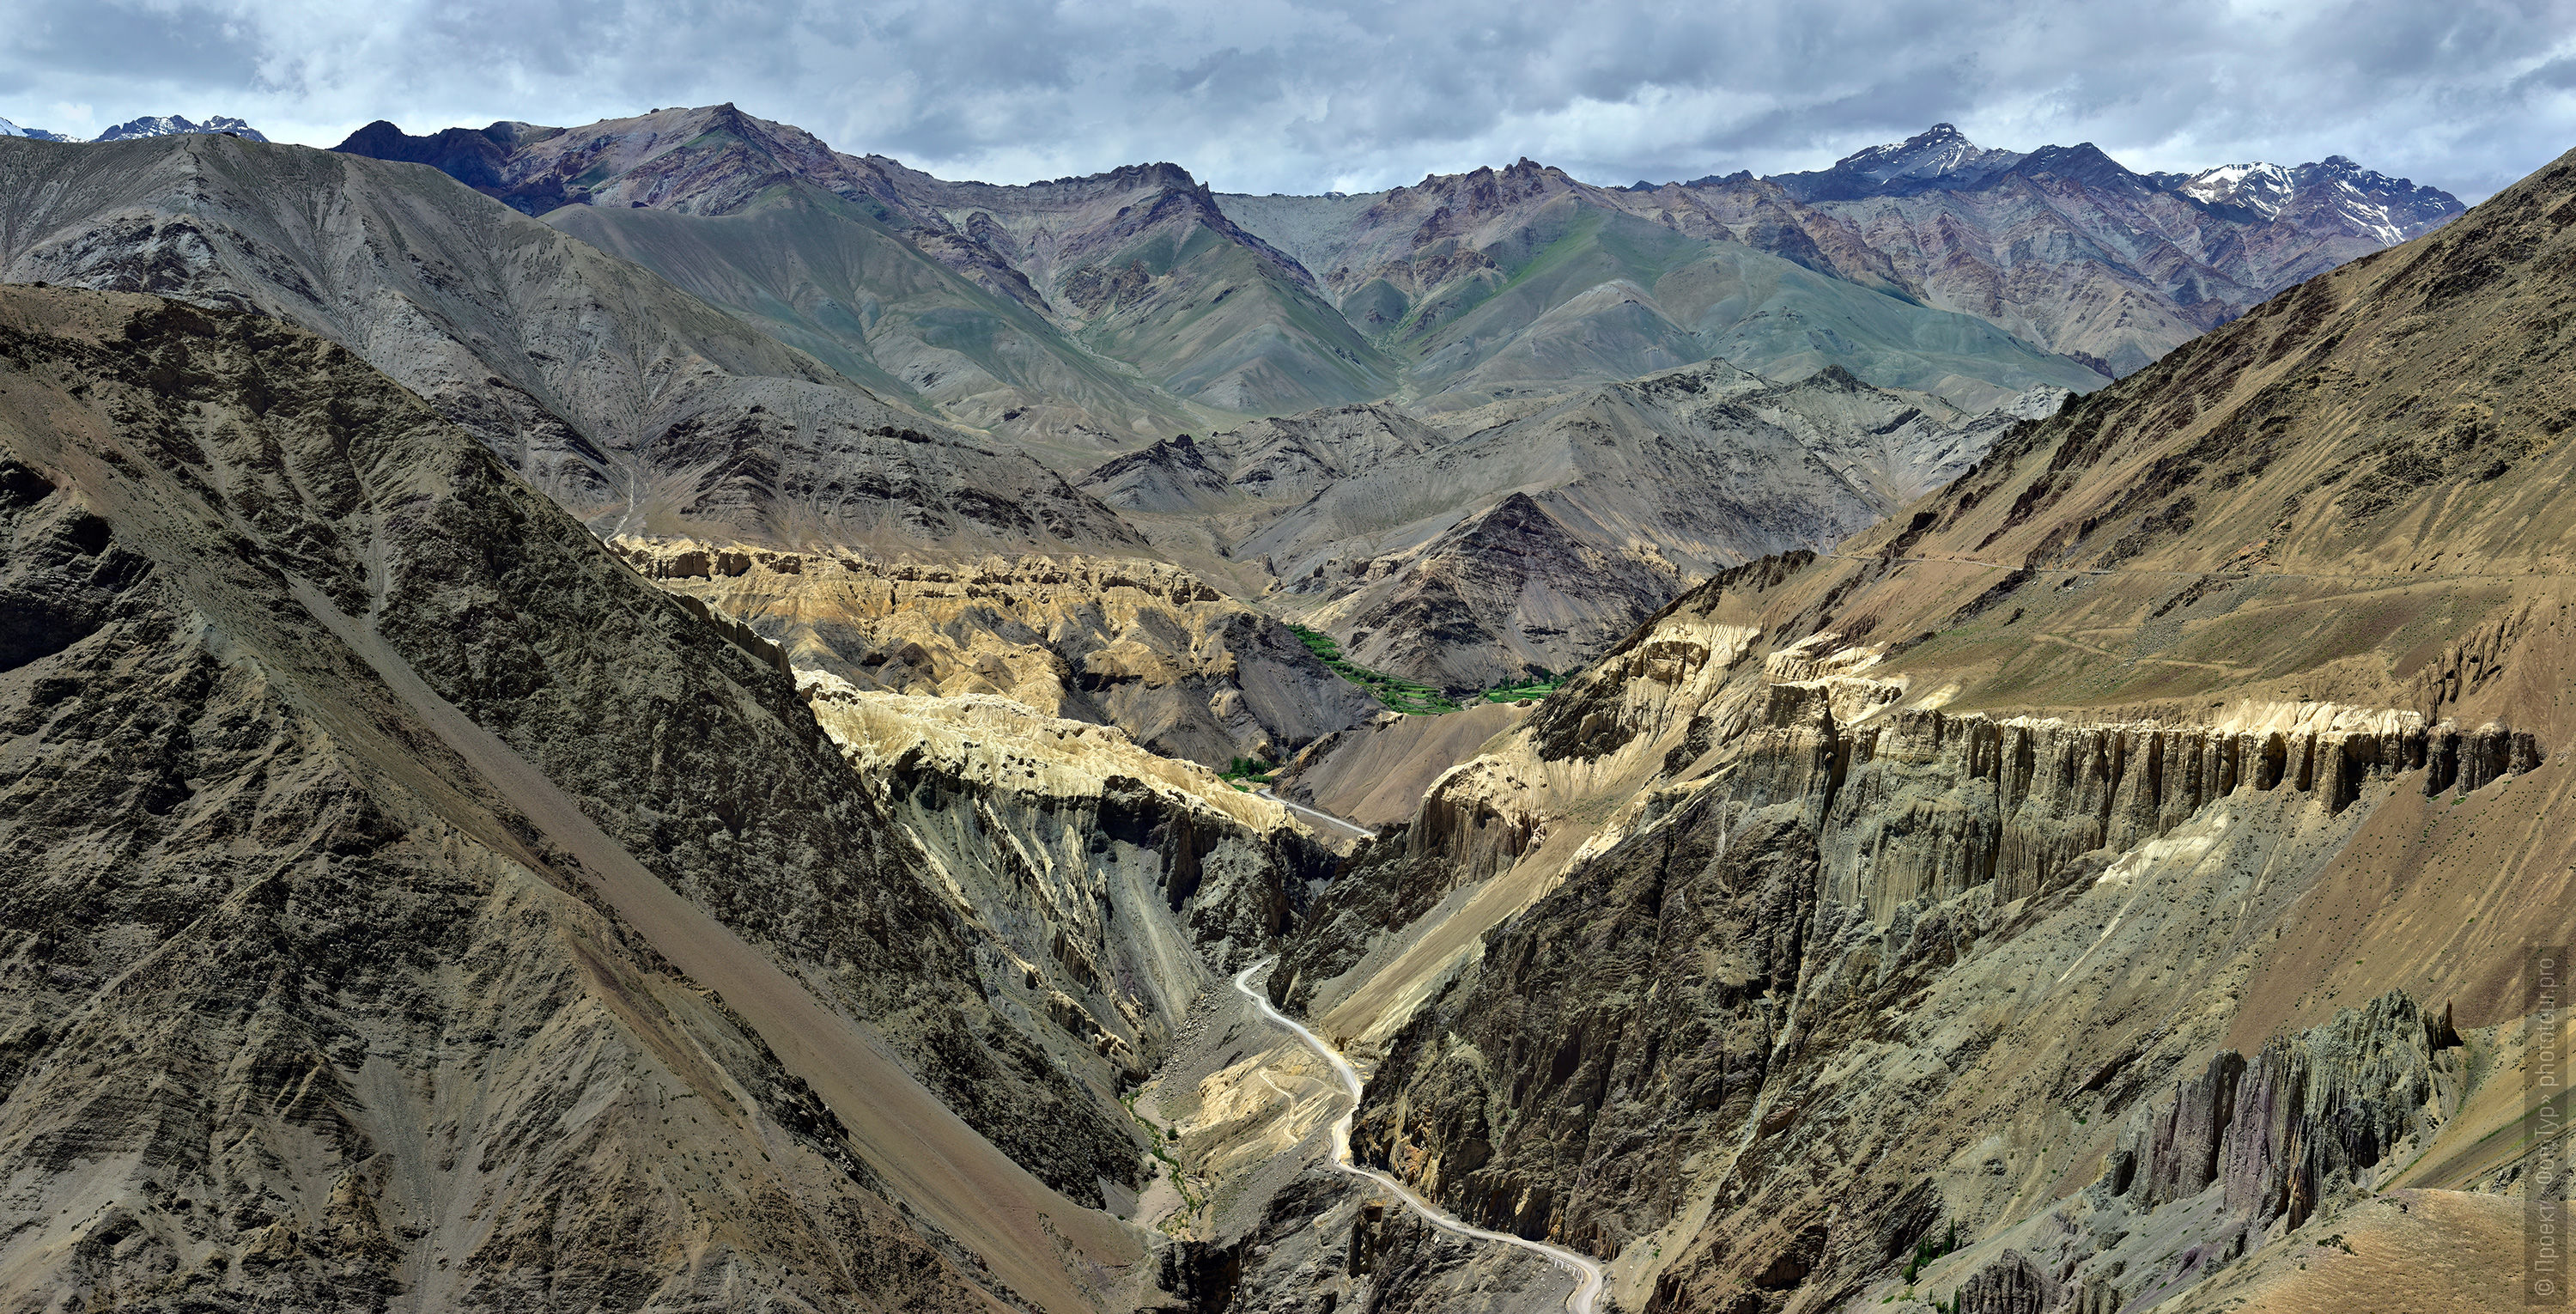 Upper mountainous army road to Lamayuru, Ladakh womens tour, August 31 - September 14, 2019.